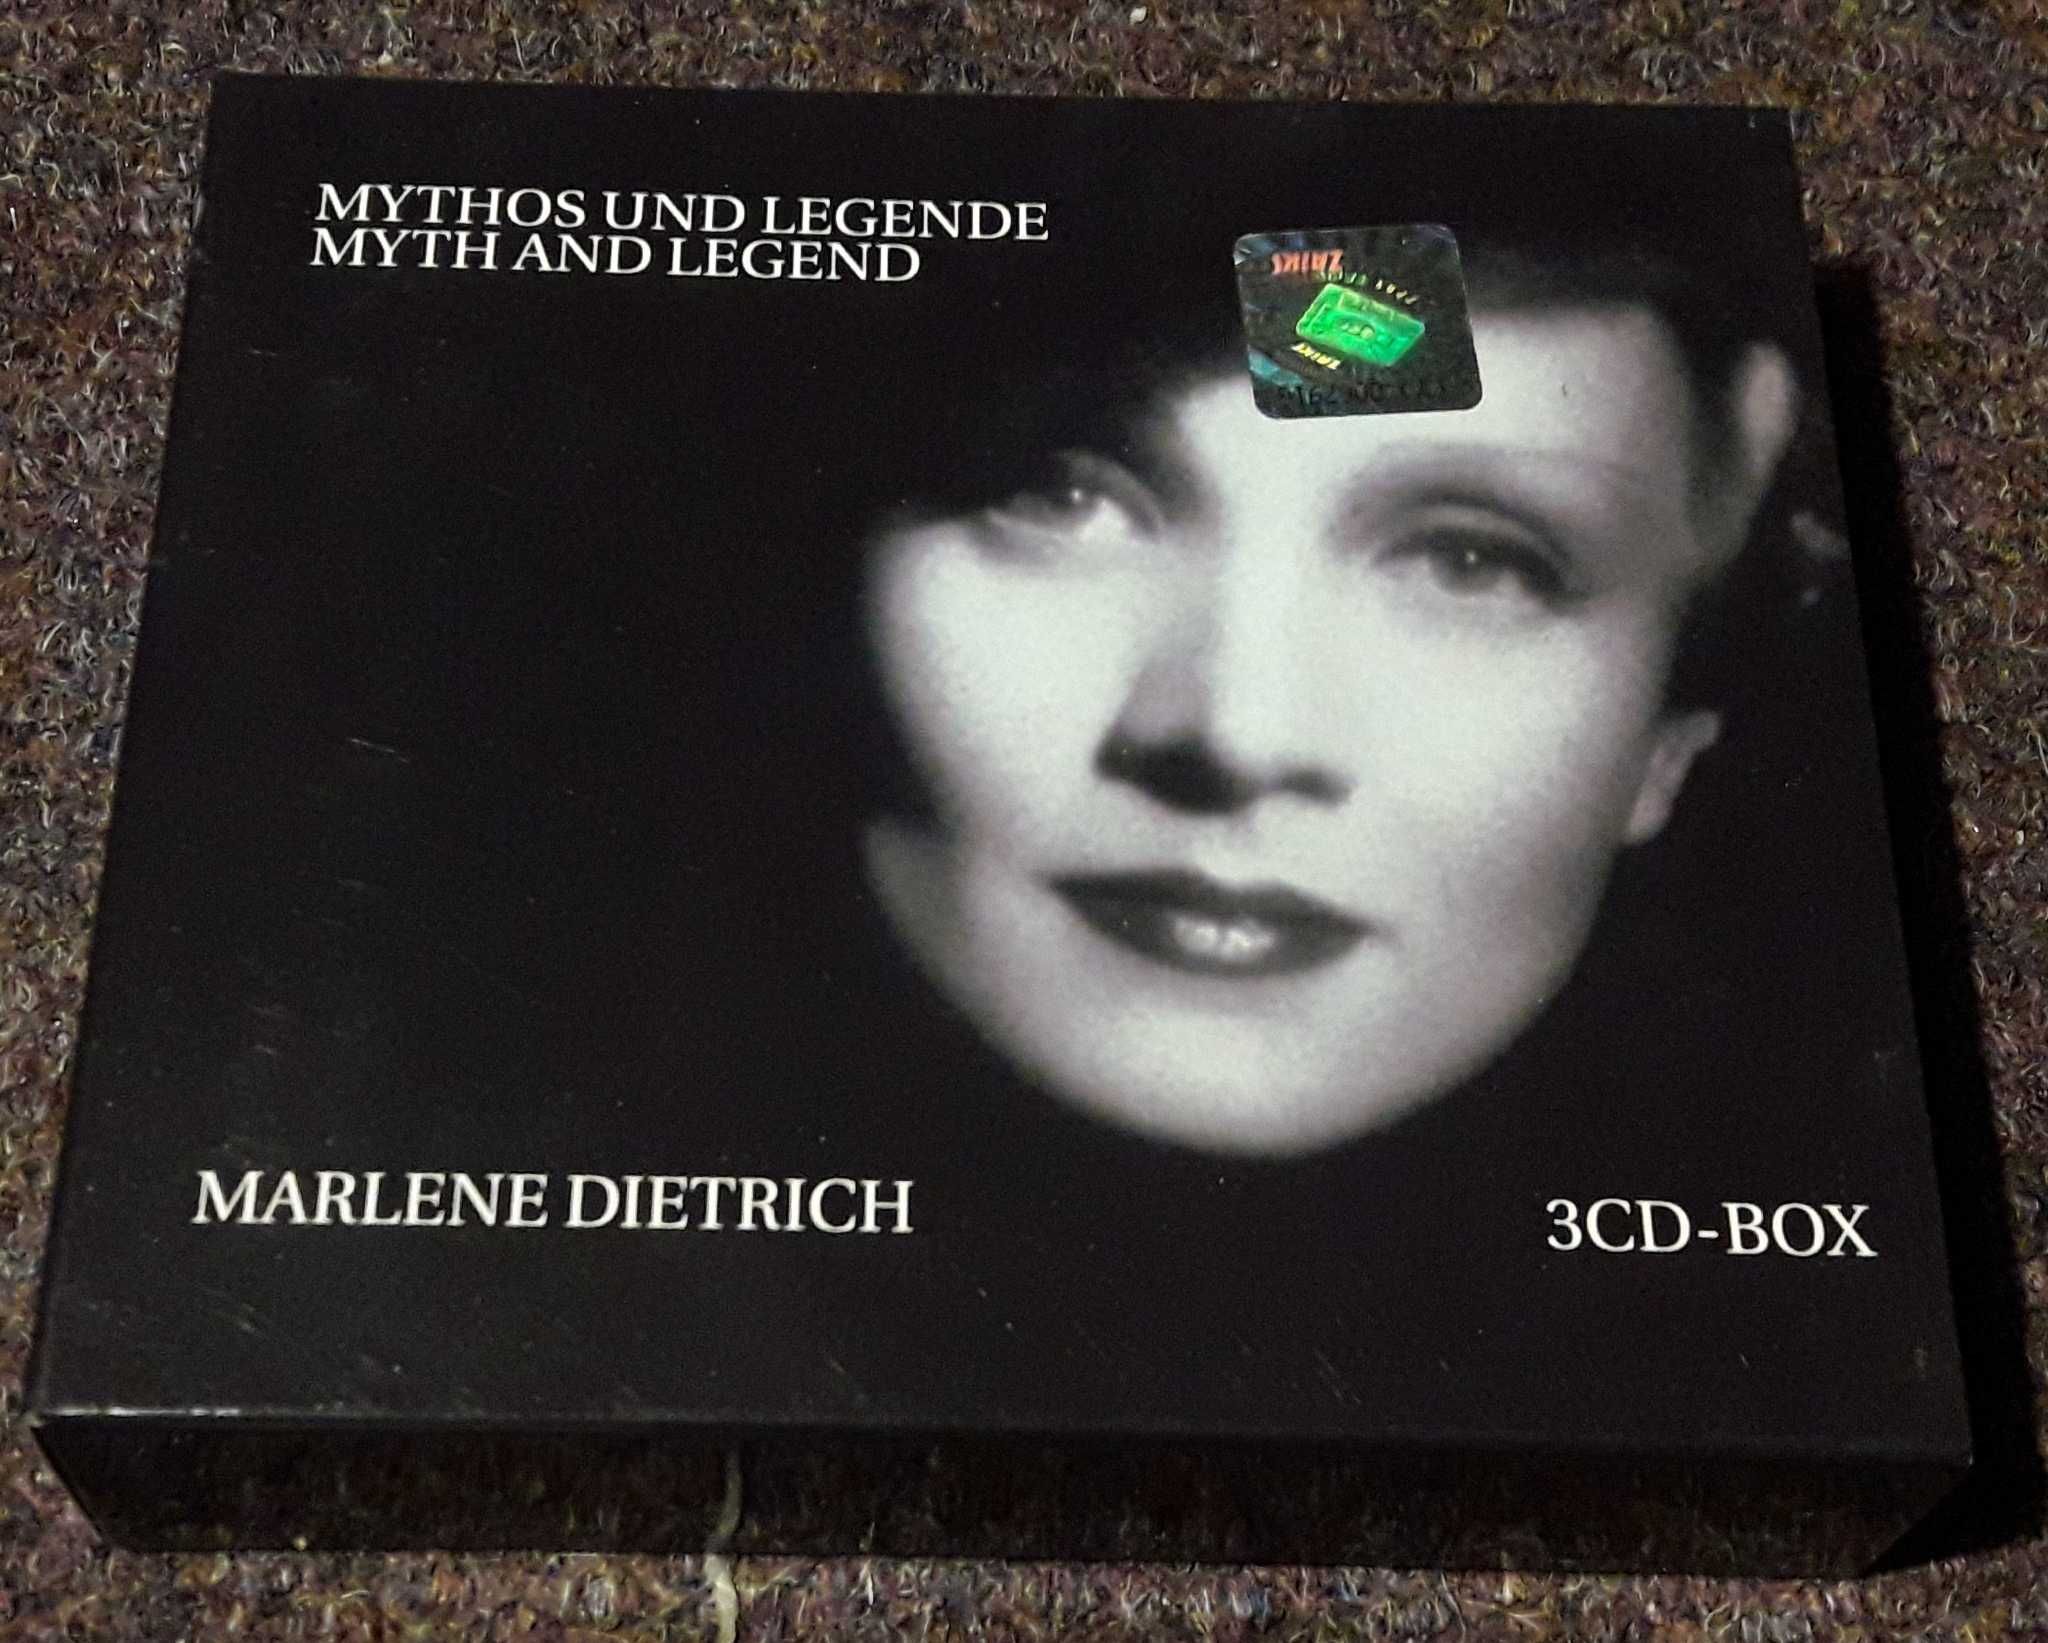 Marlene Dietrich 3CD "Myth and Legend"